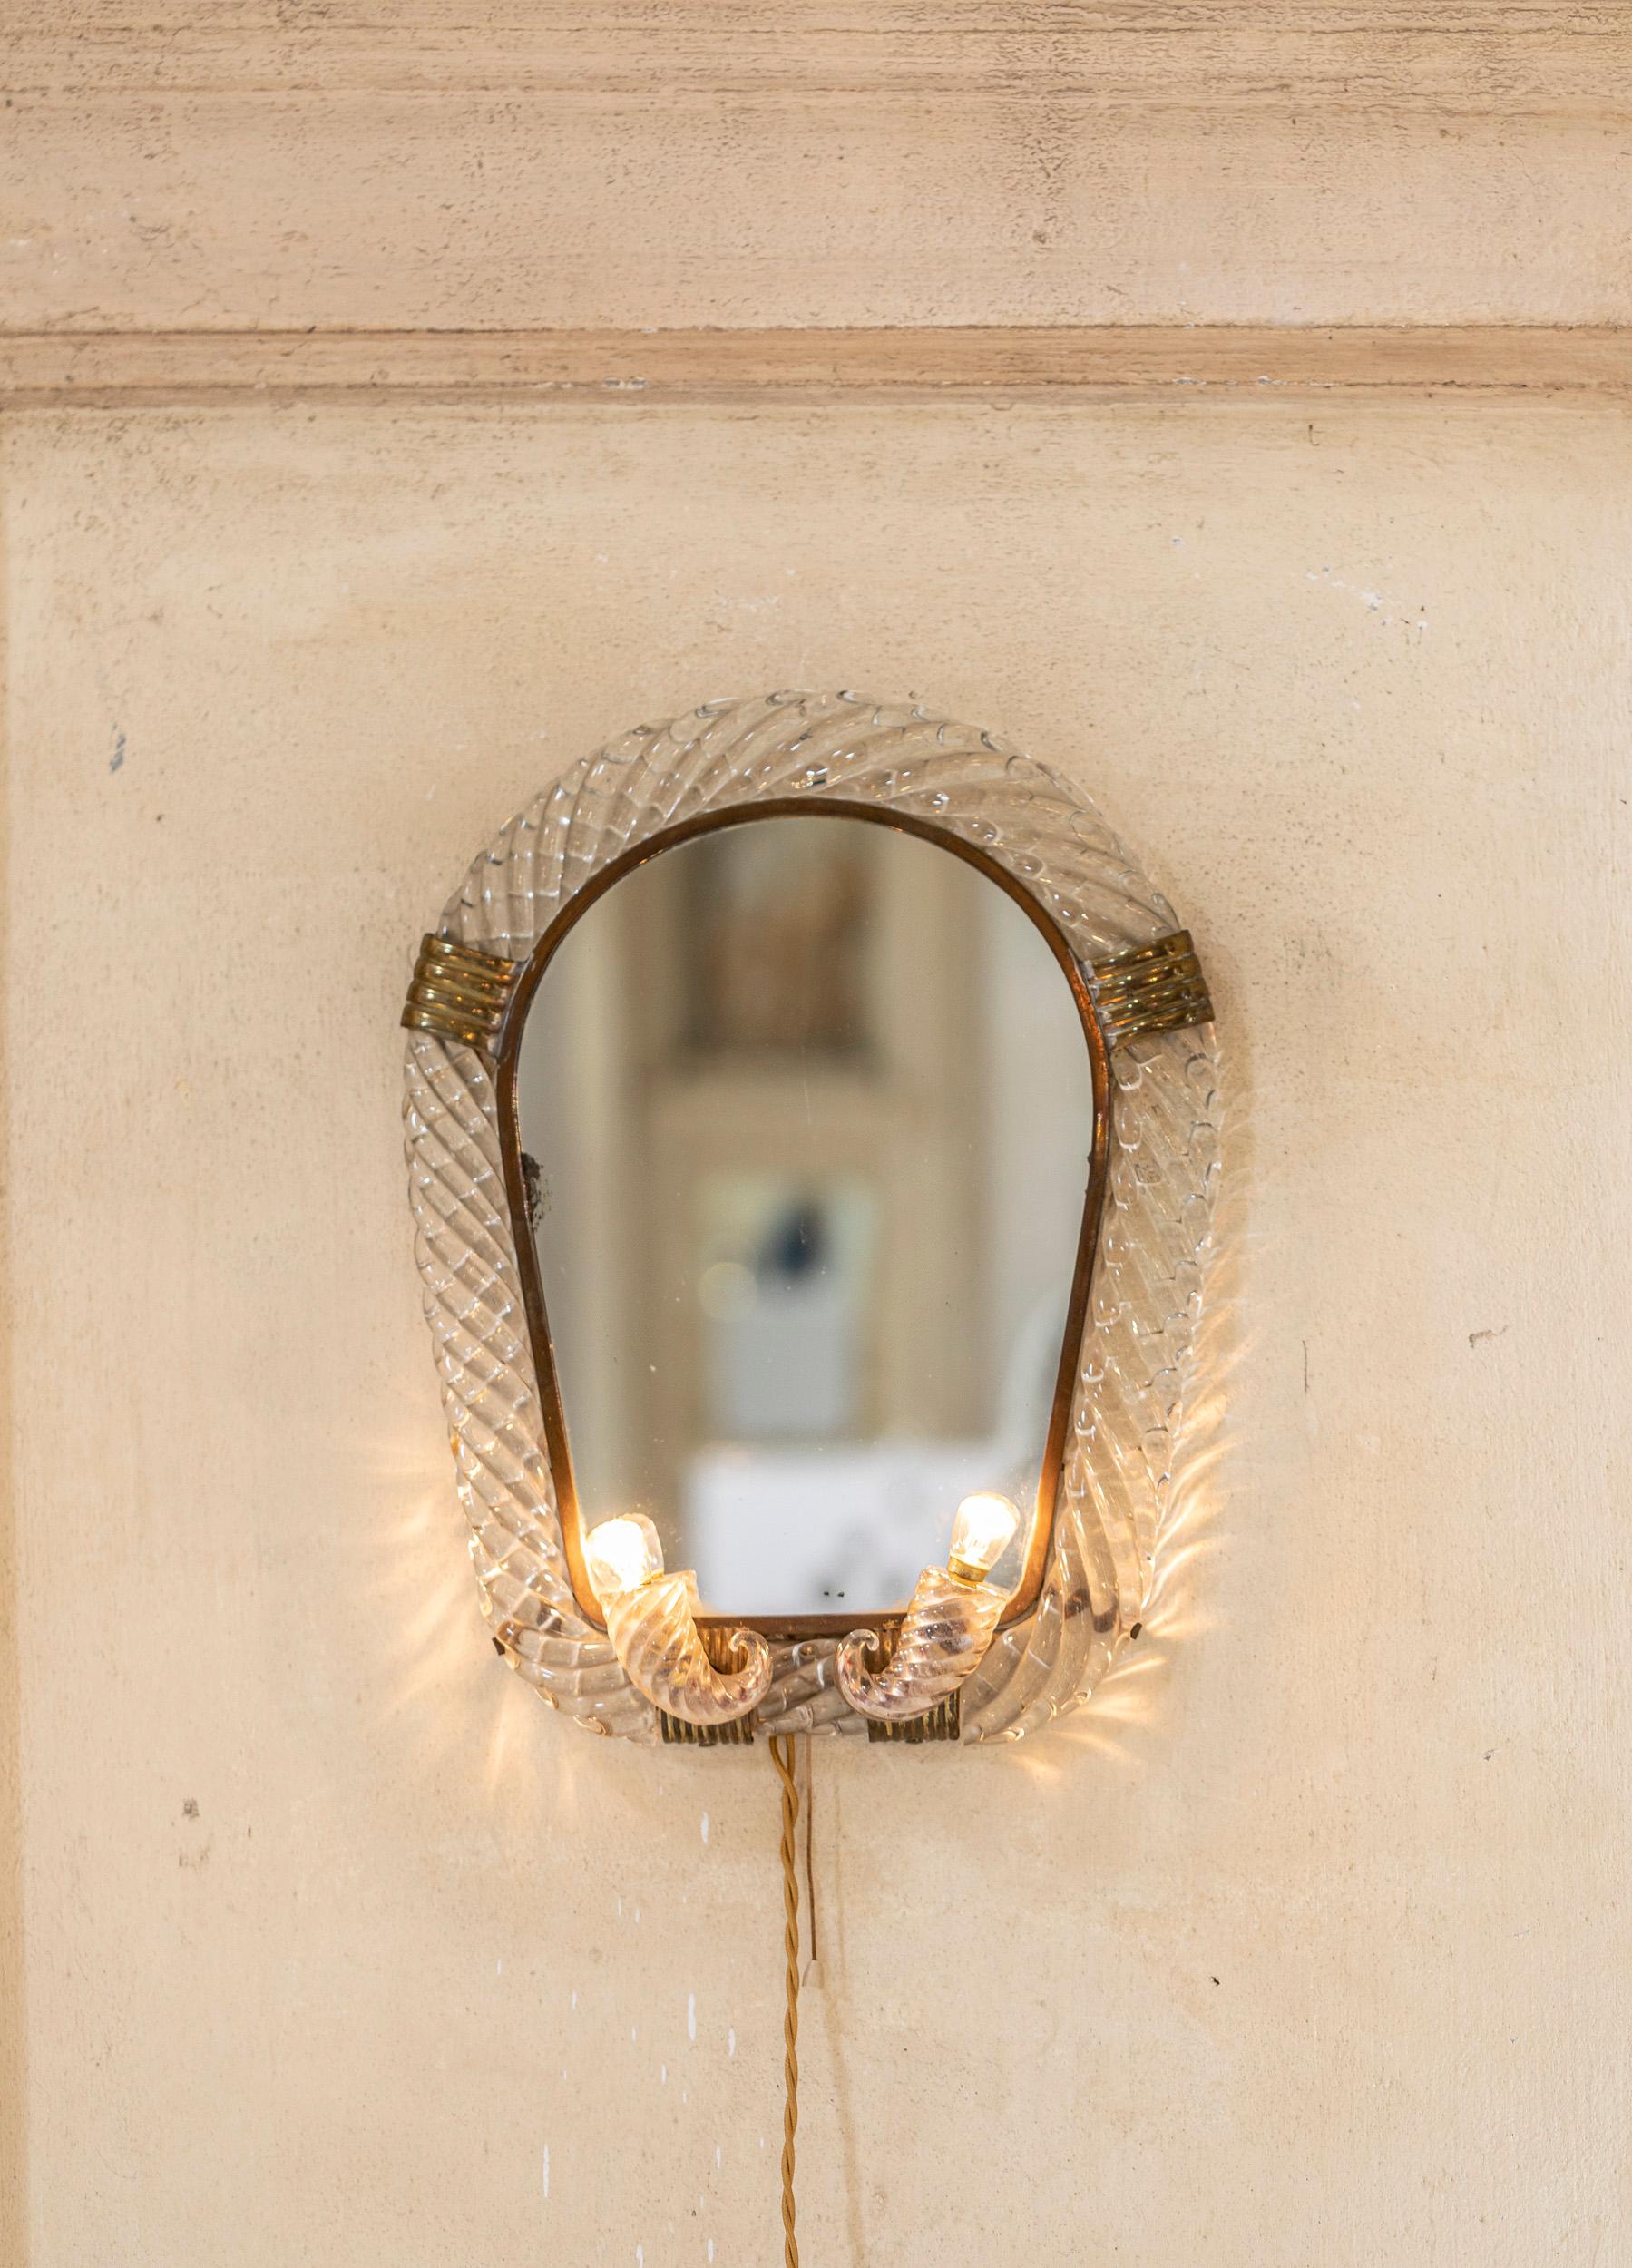 Mid-Century Modern Venini Wall Mirror Attributed to Gio Ponti, Italy 1940 circa For Sale